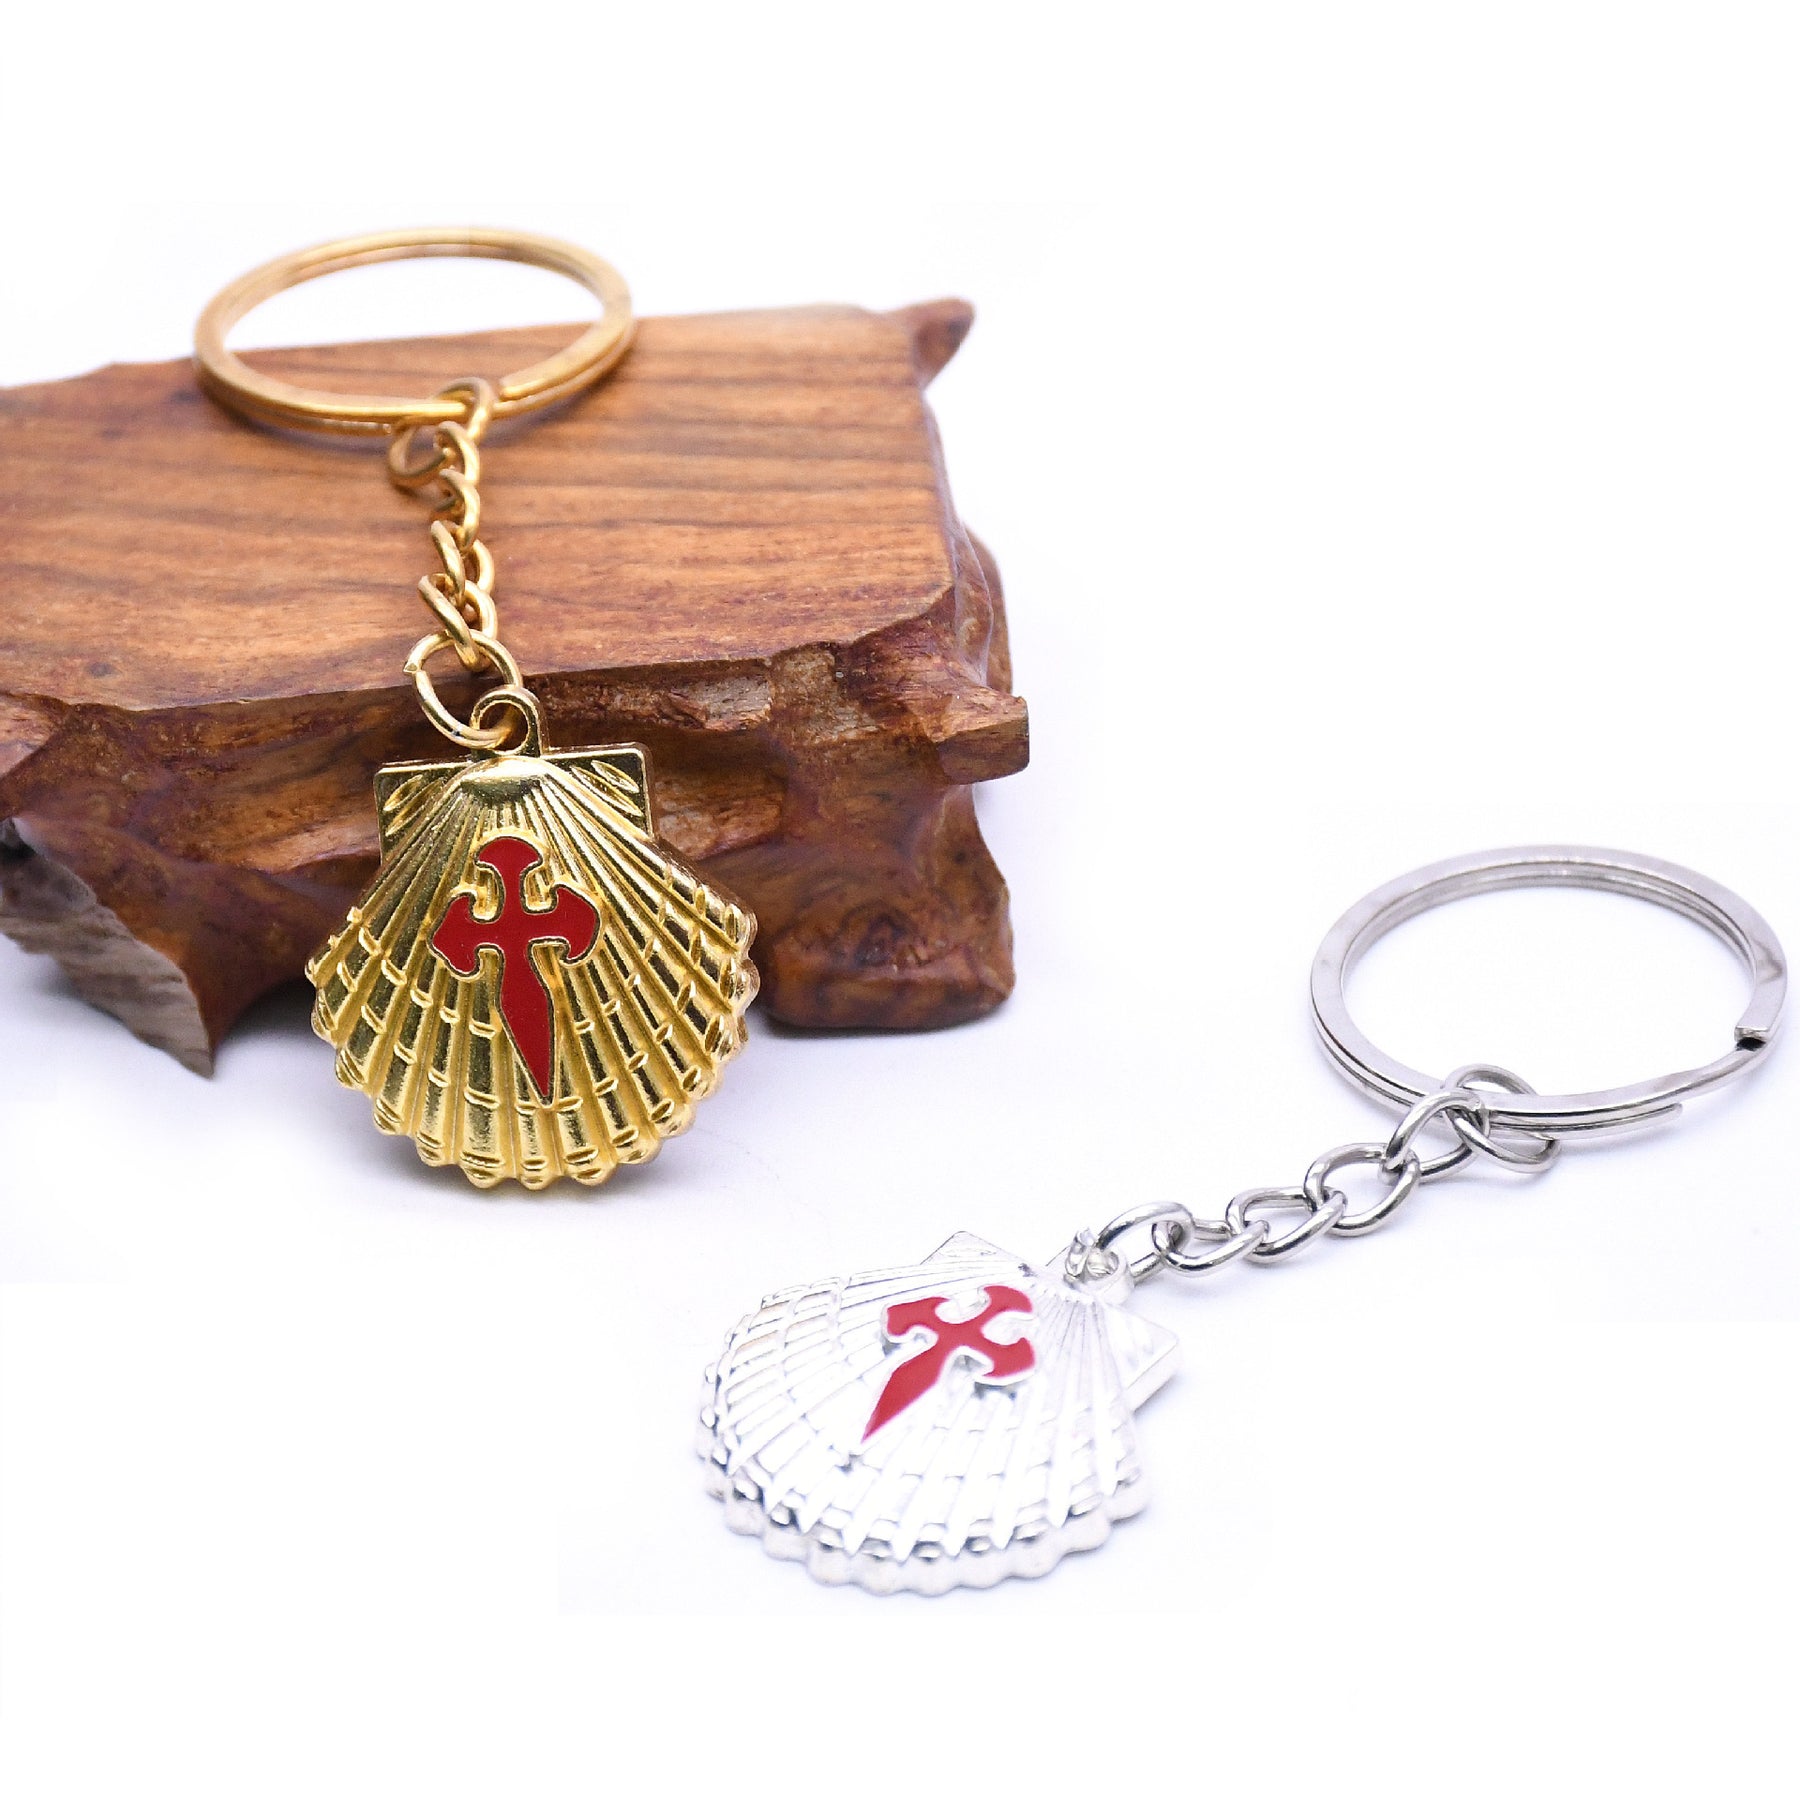 Knights Templar Commandery Keychain - Gold Cross Shell Cross Pendant - Bricks Masons